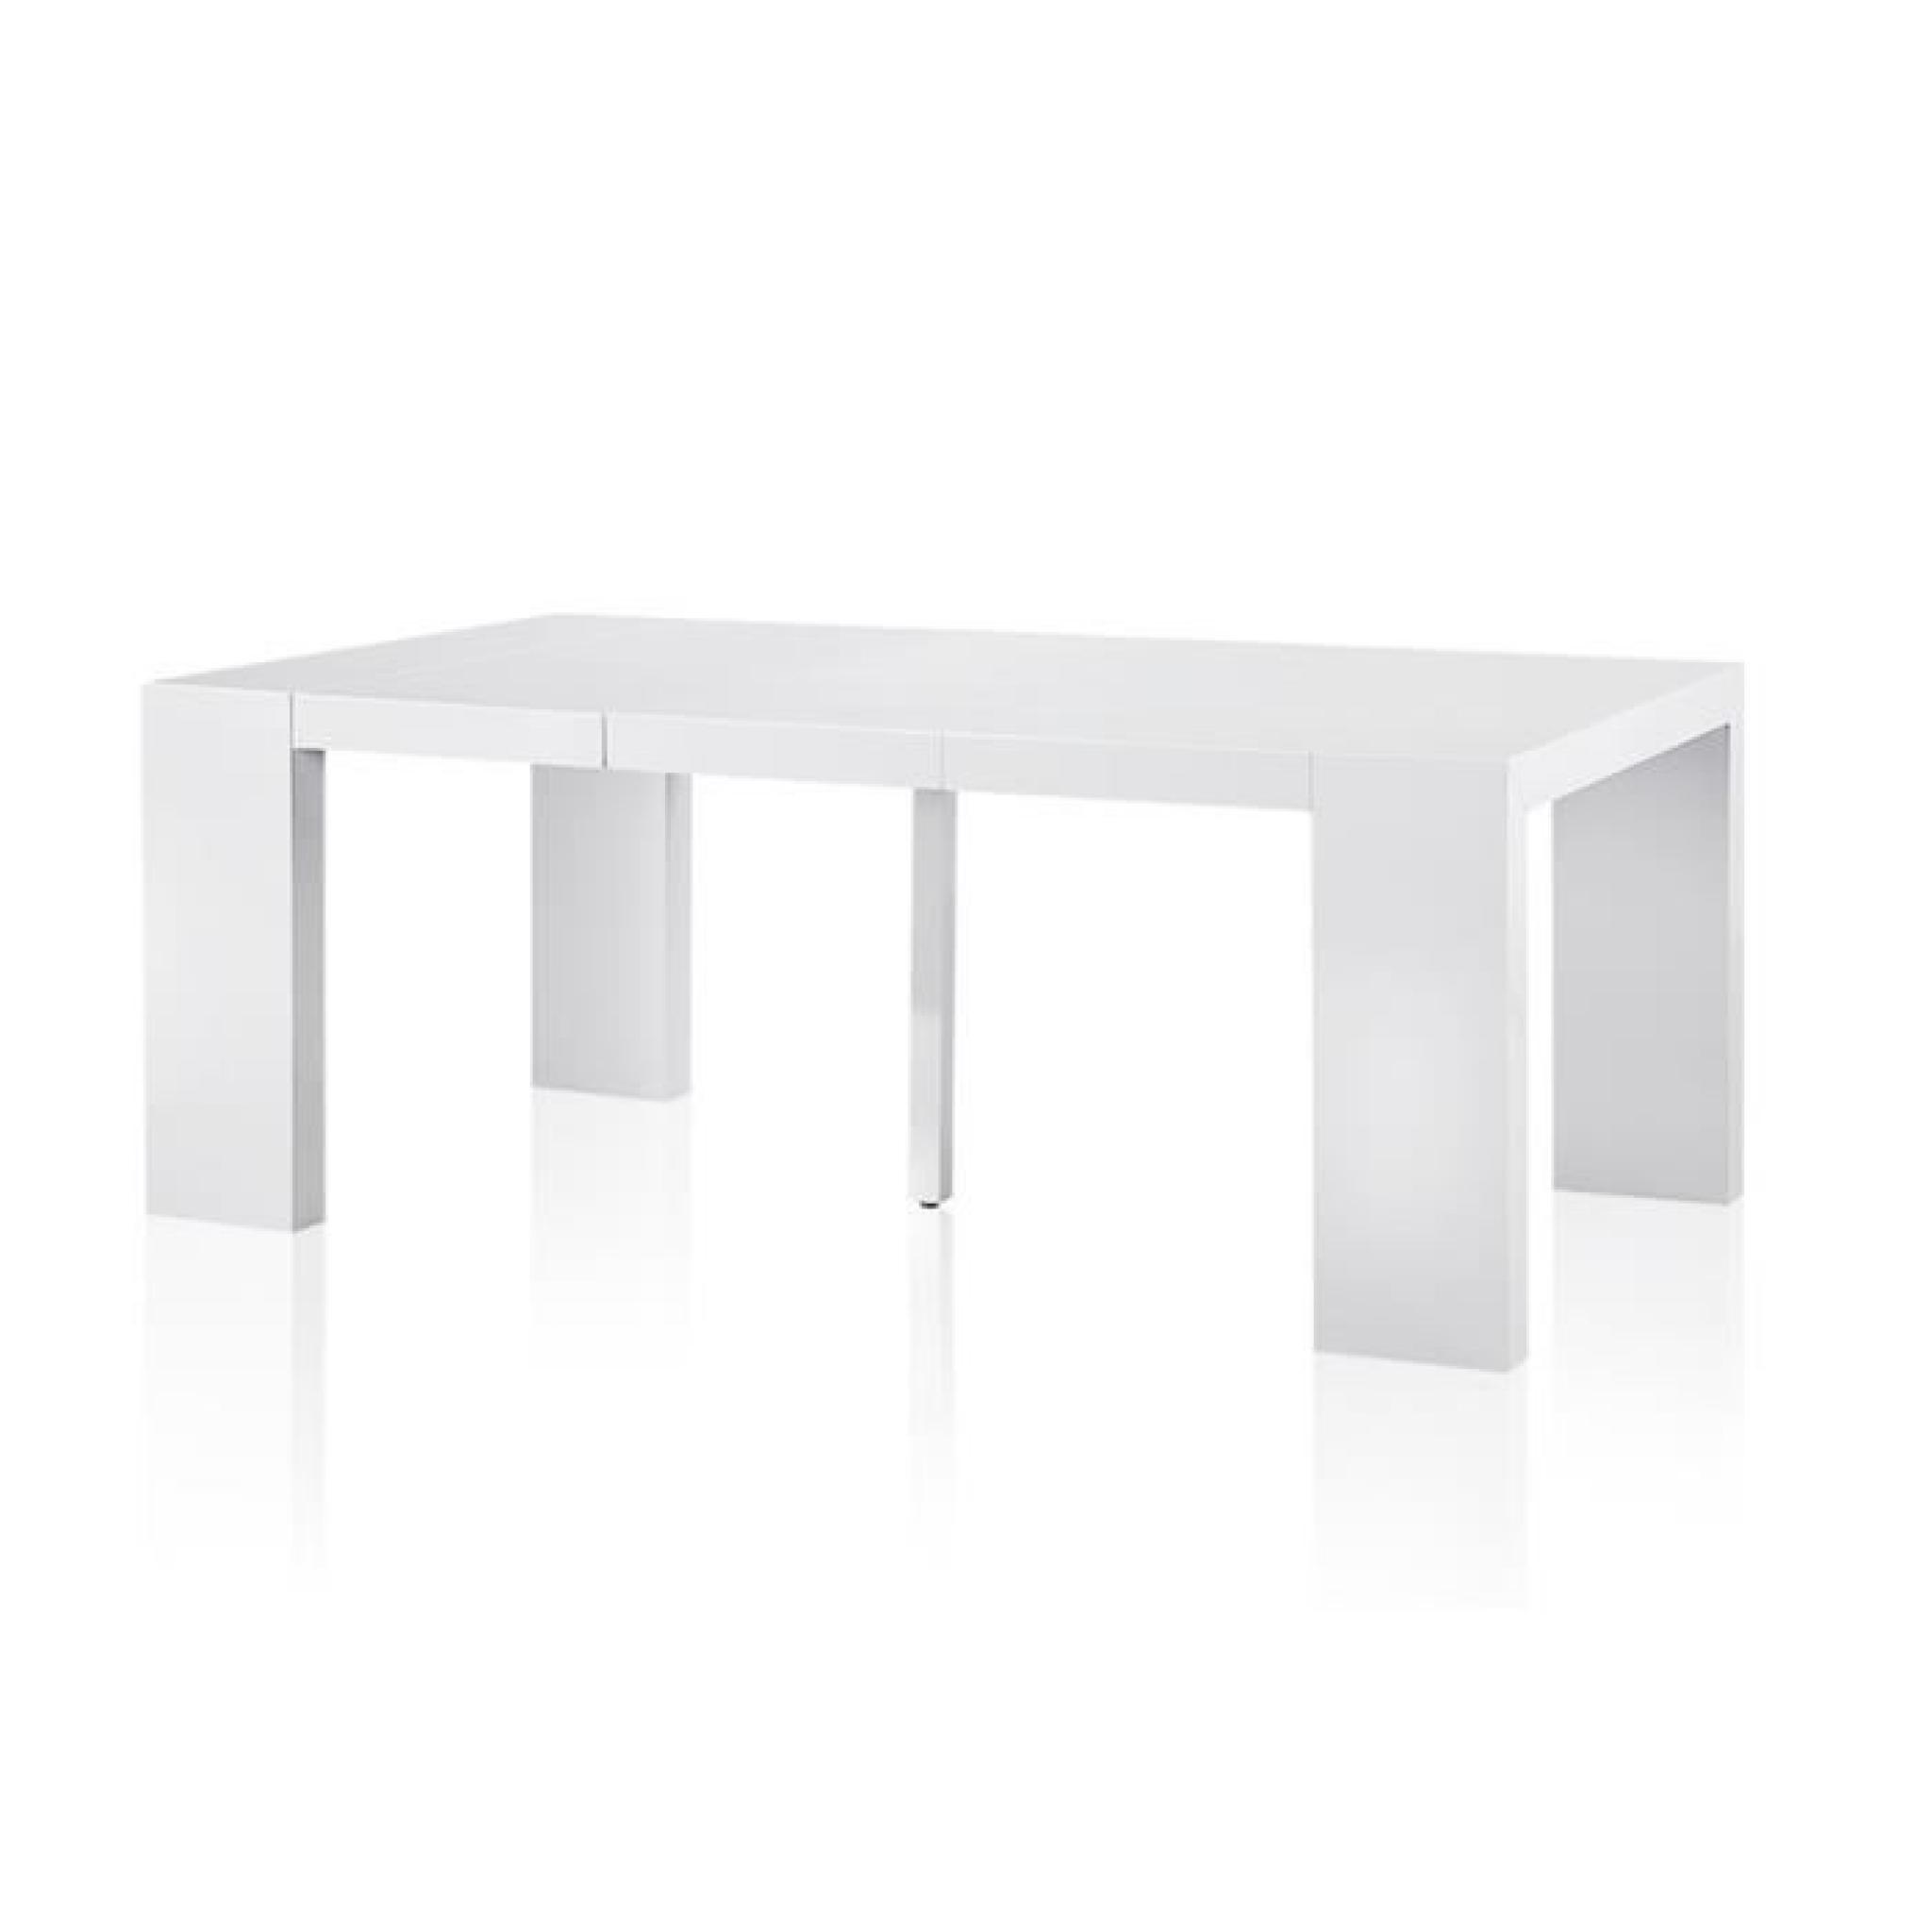 Table console 4 rallonges Wenge STOCK XL pas cher